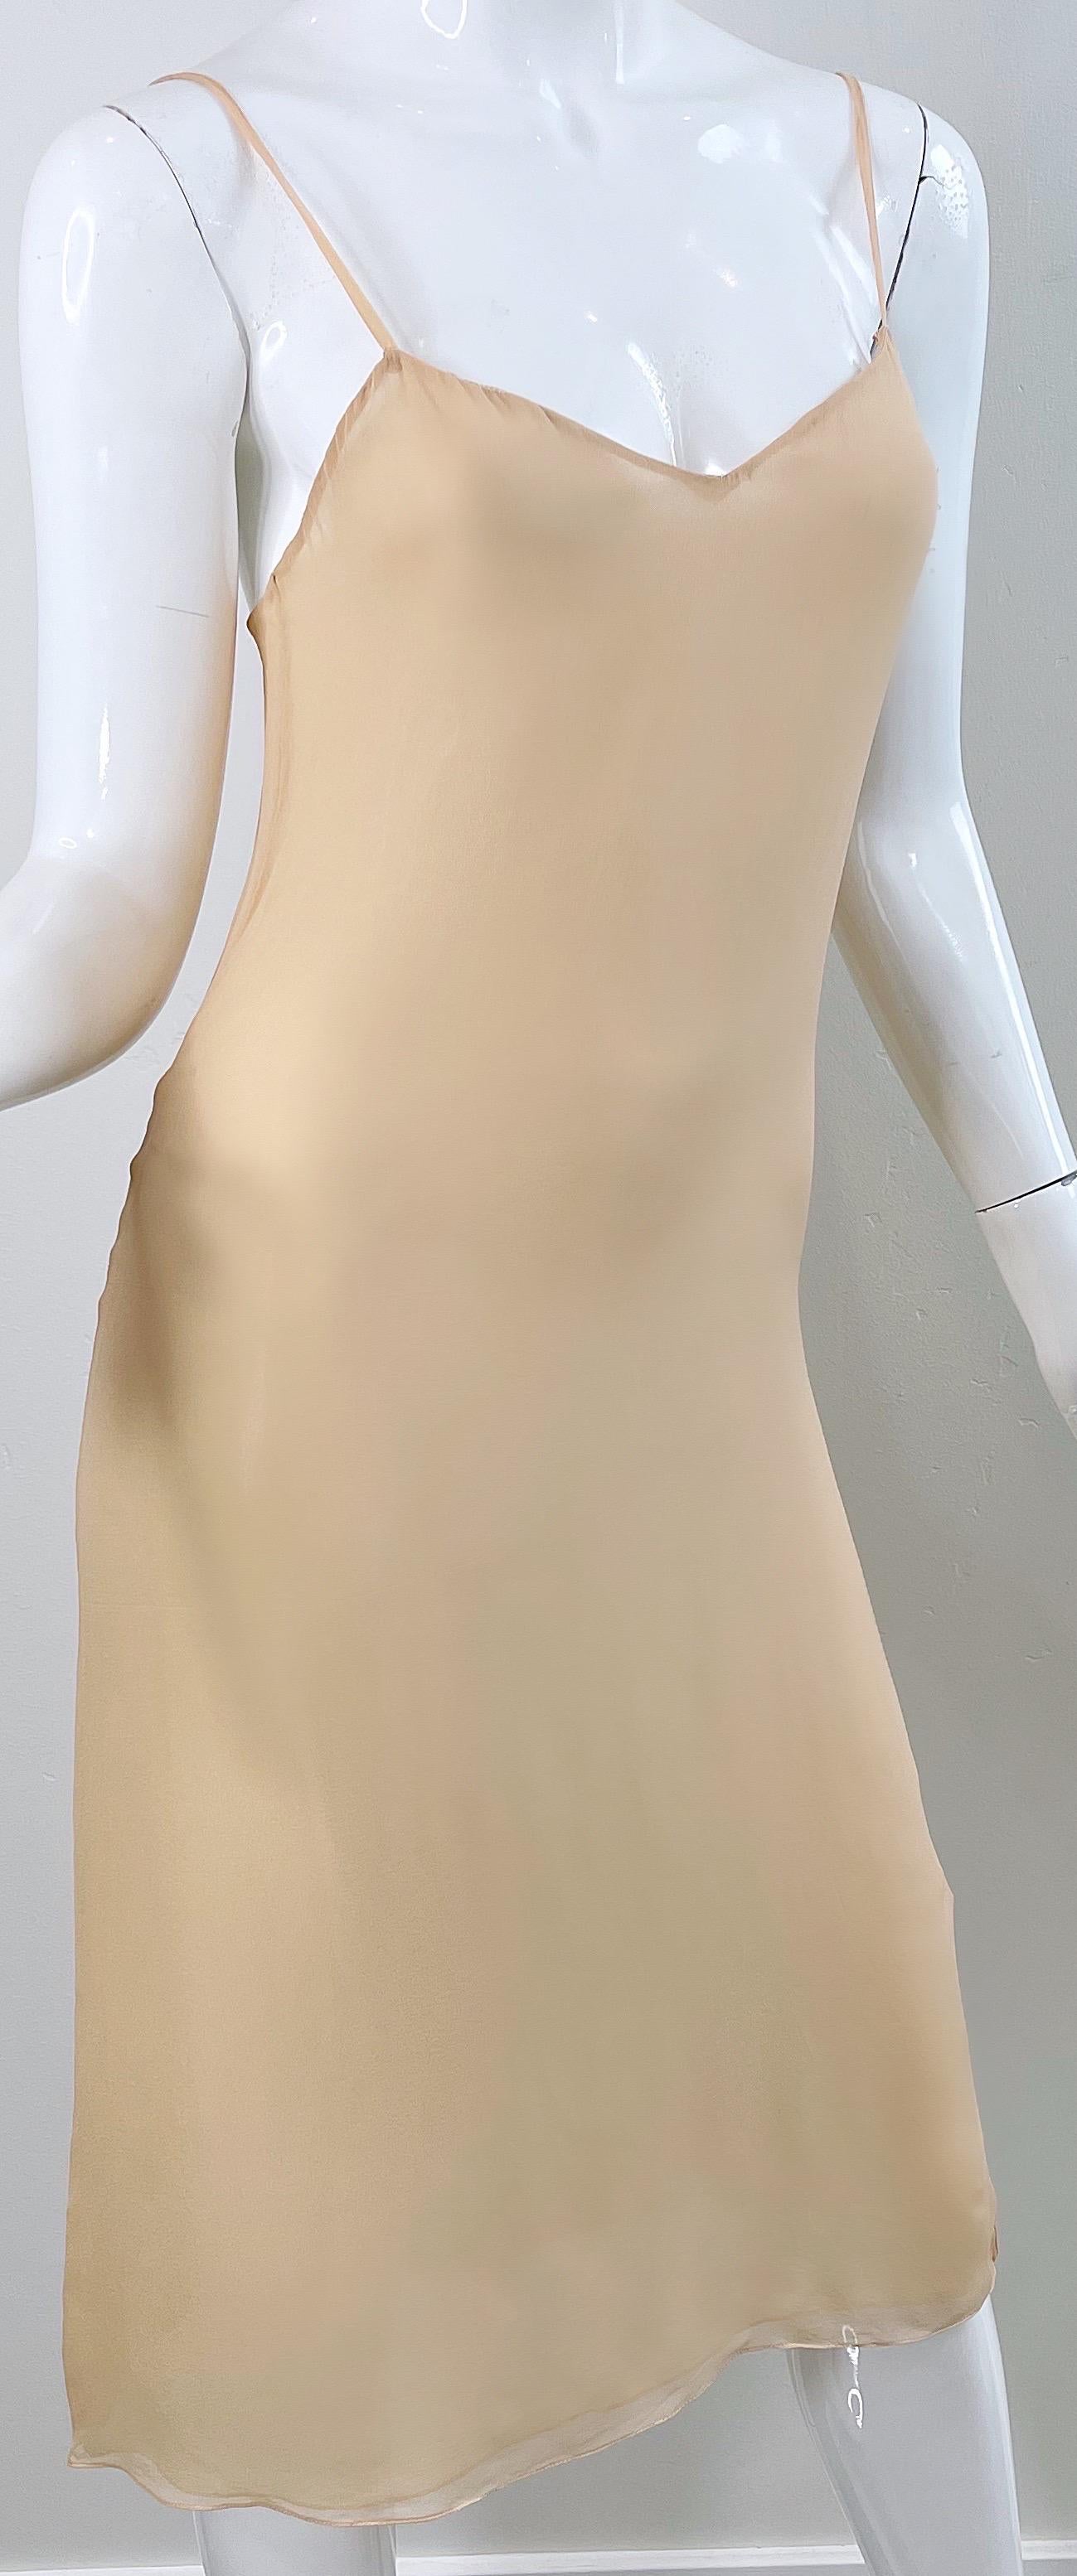 1970s Halston Couture Nude Silk Chiffon Semi Sheer Bias Cut Vintage 70s Dress  For Sale 2